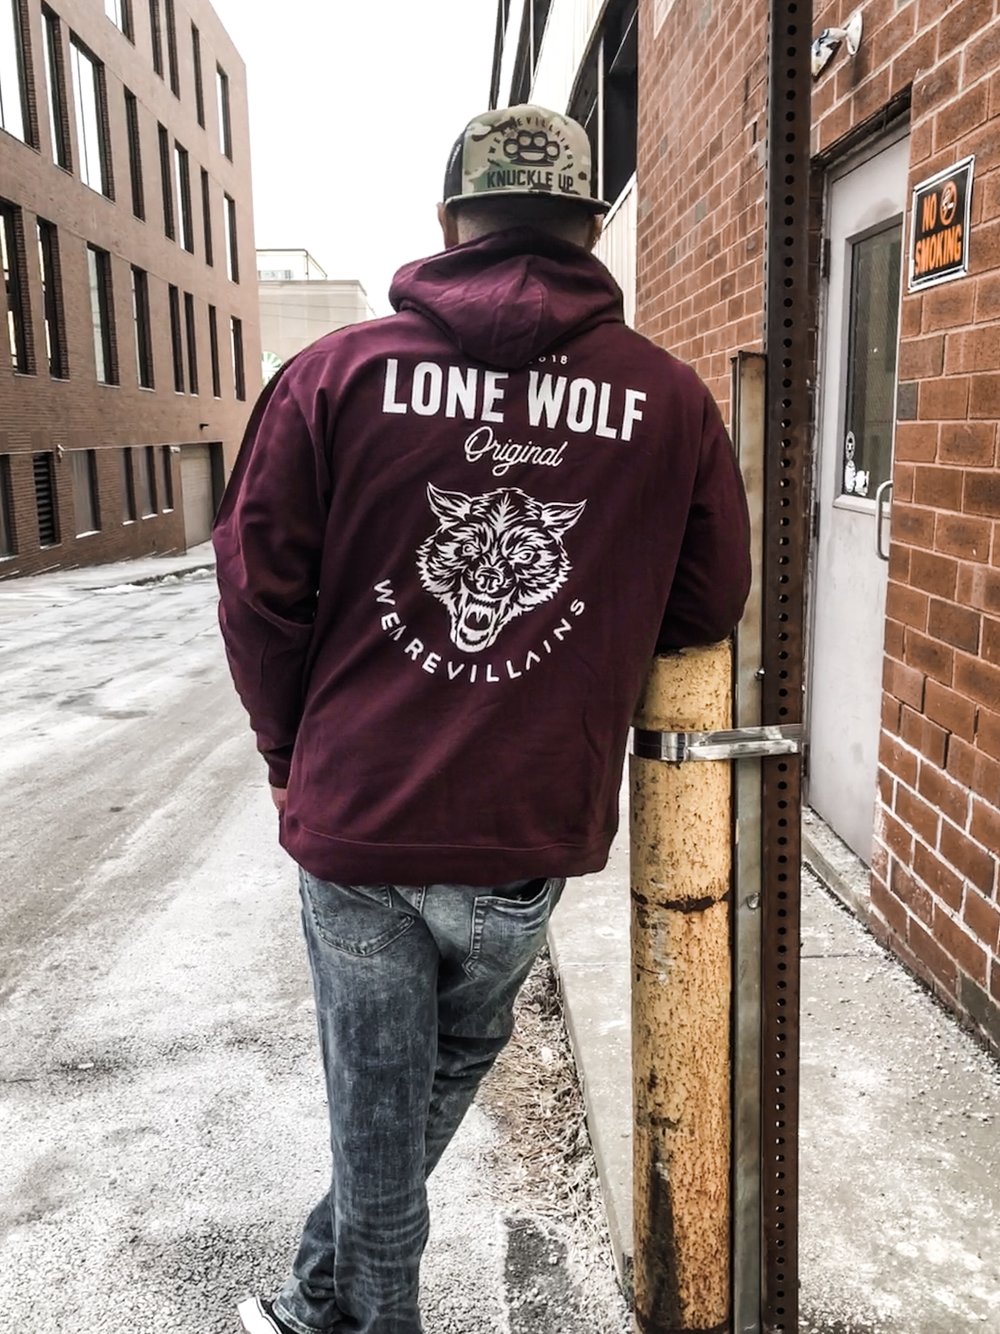 Lone Wolf maroon WEAREVILLAINS 